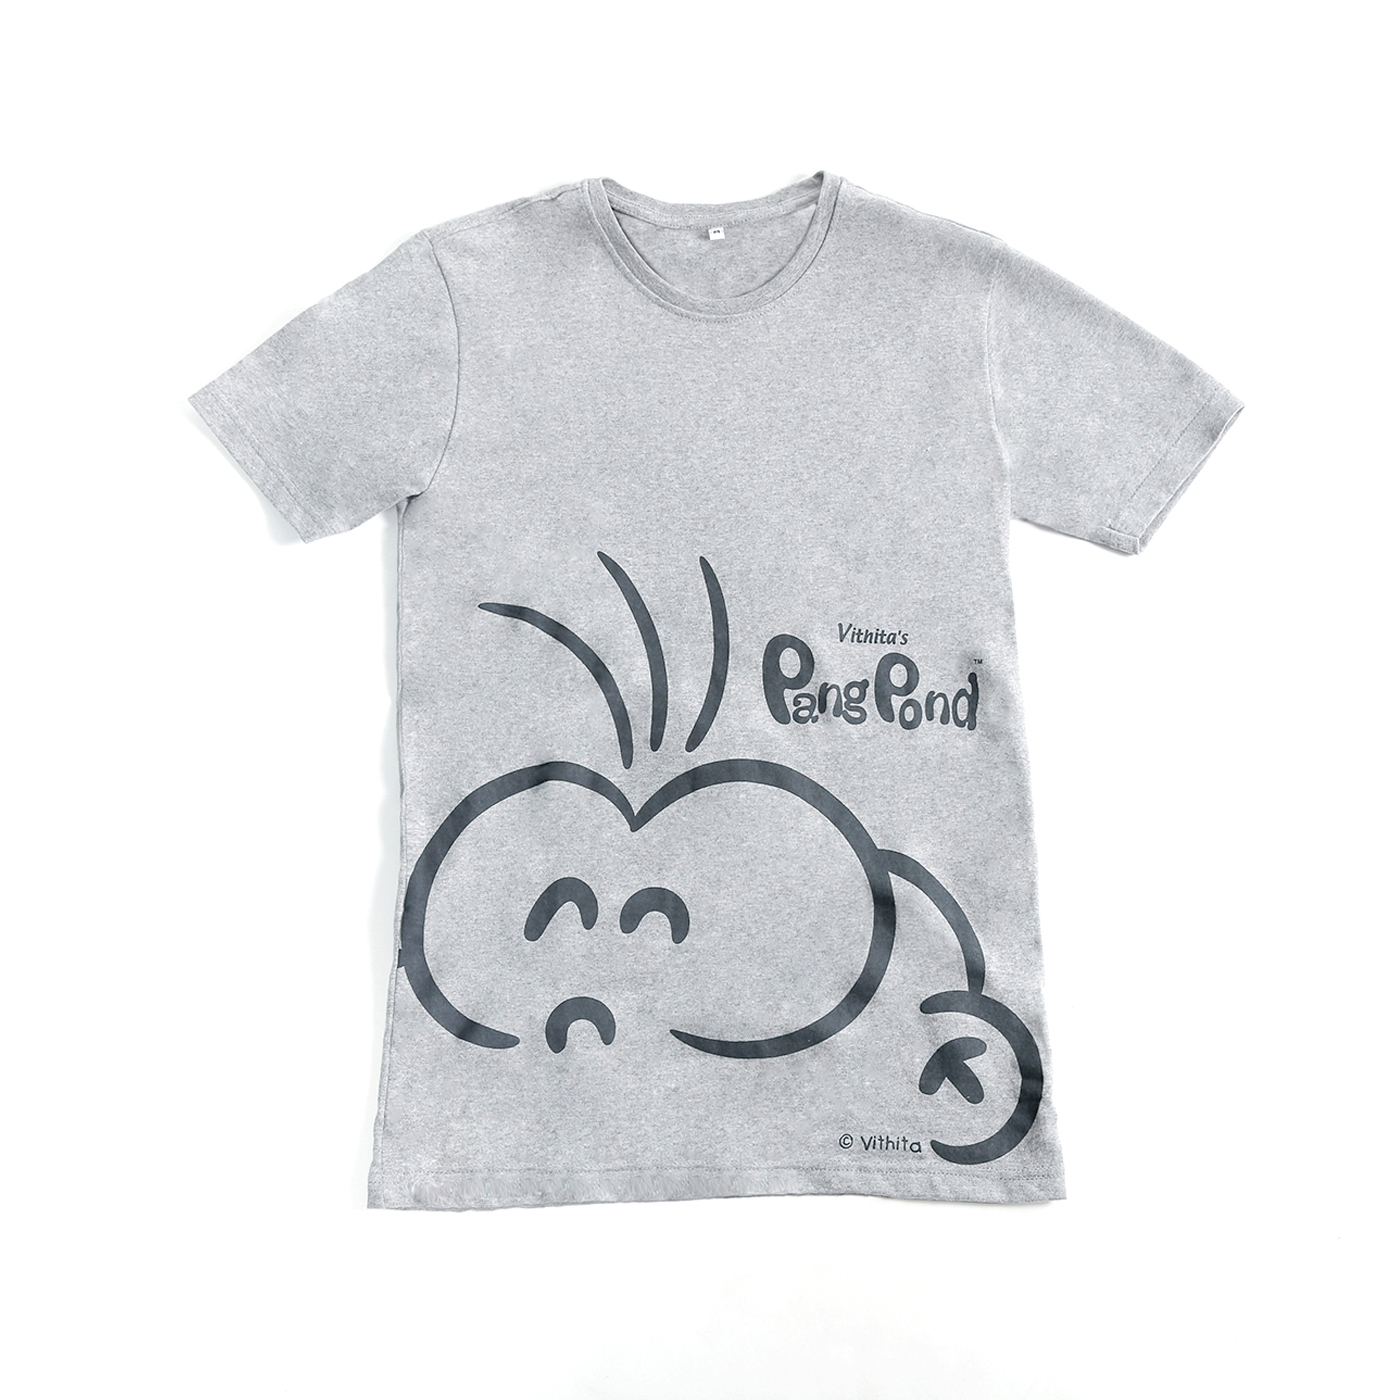 PangPond T-shirt: Gray [M]